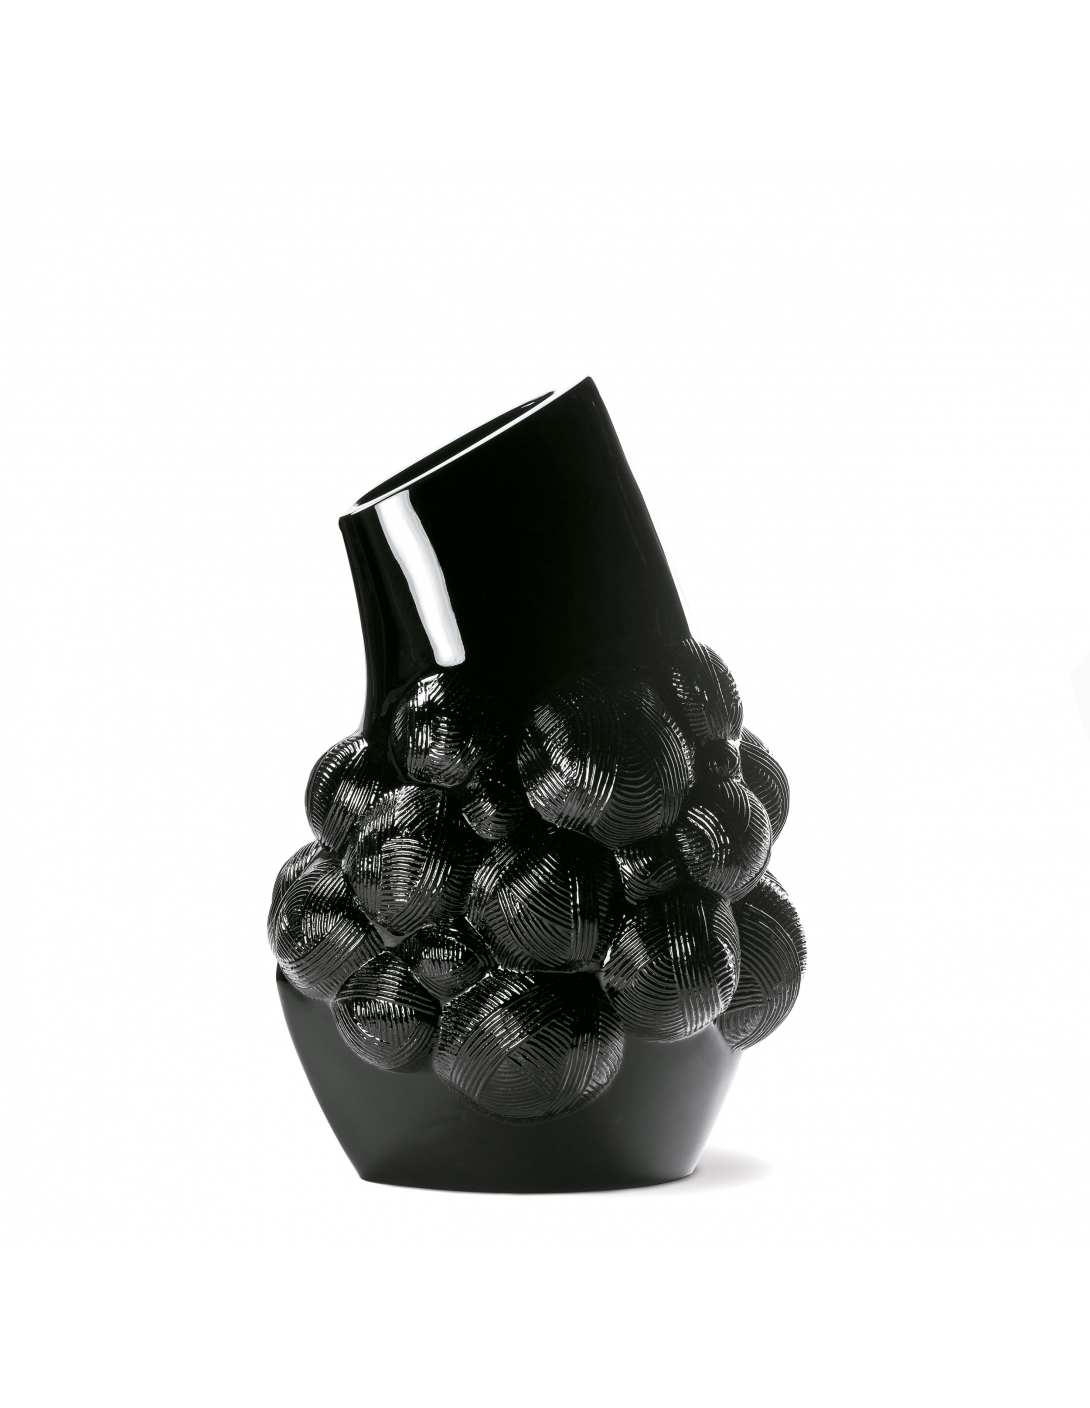 Gomitolo's Vase